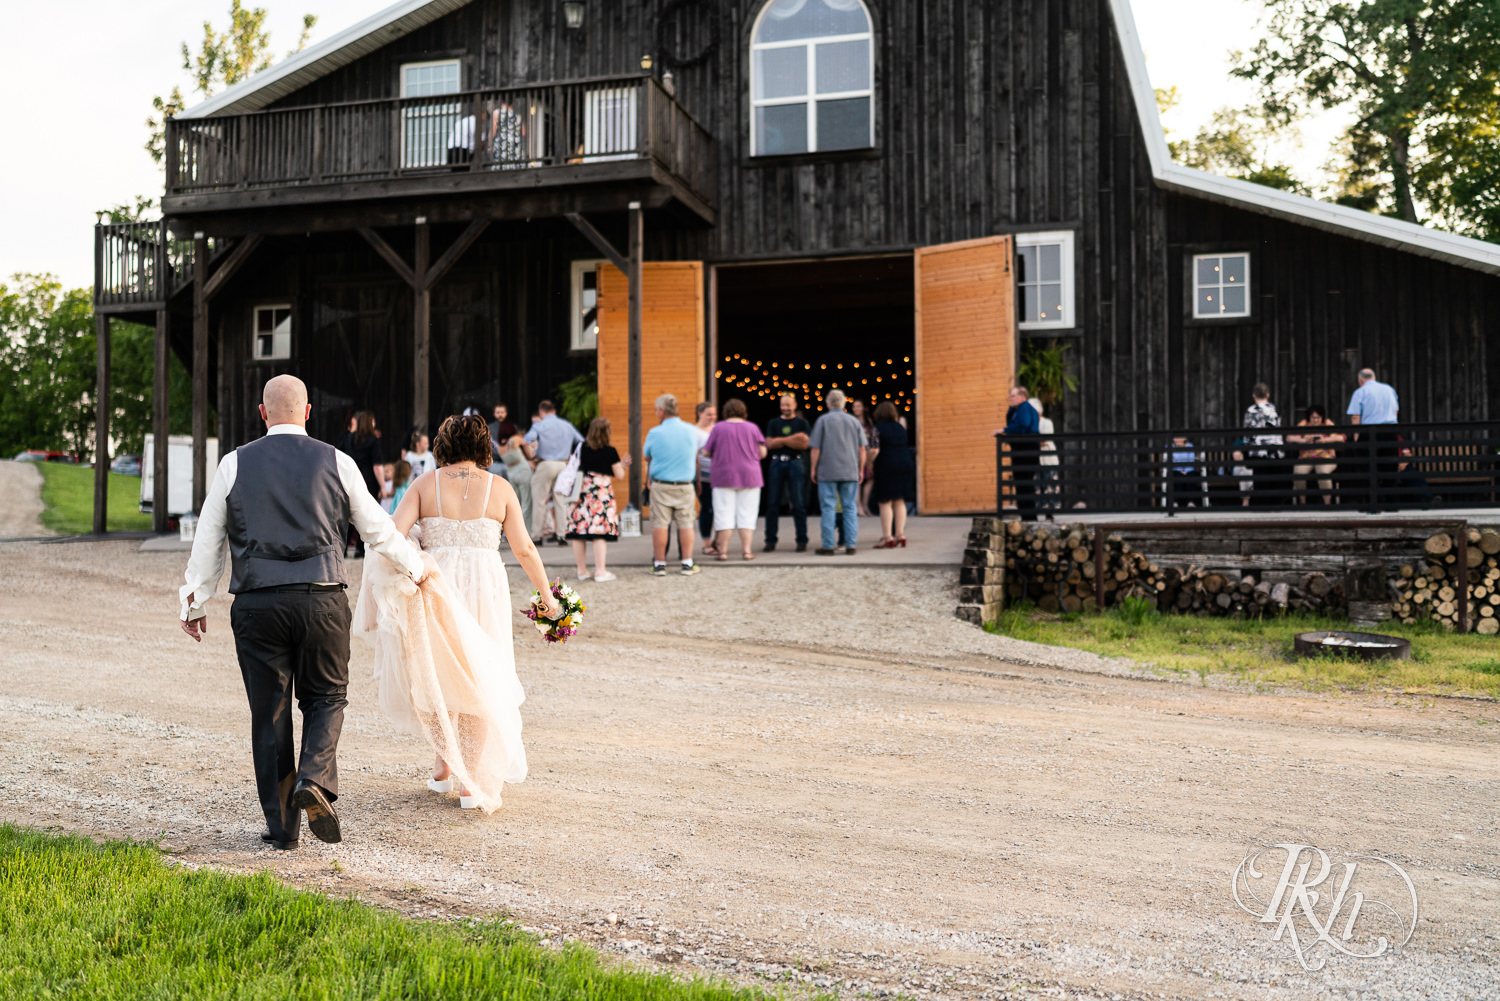 Bride and groom walking to wedding reception at Barn at Crocker's Creek in Faribault, Minnesota.